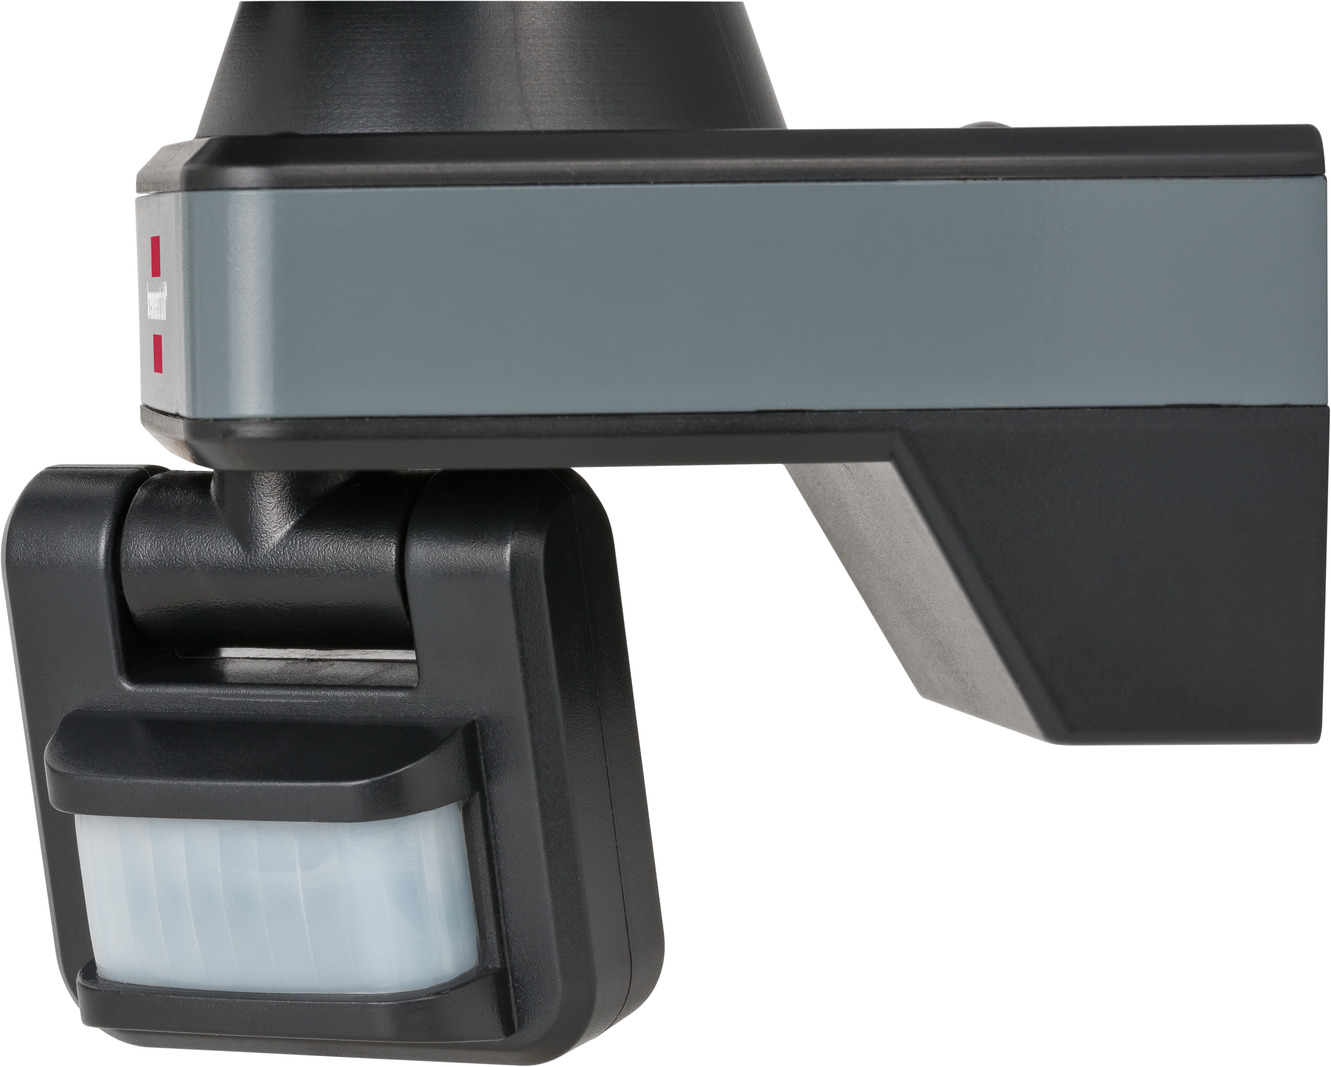 brennenstuhl®Connect LED WiFi spotlight with infrared motion detector WF  2050 P 2400lm, PIR, IP54 | brennenstuhl®